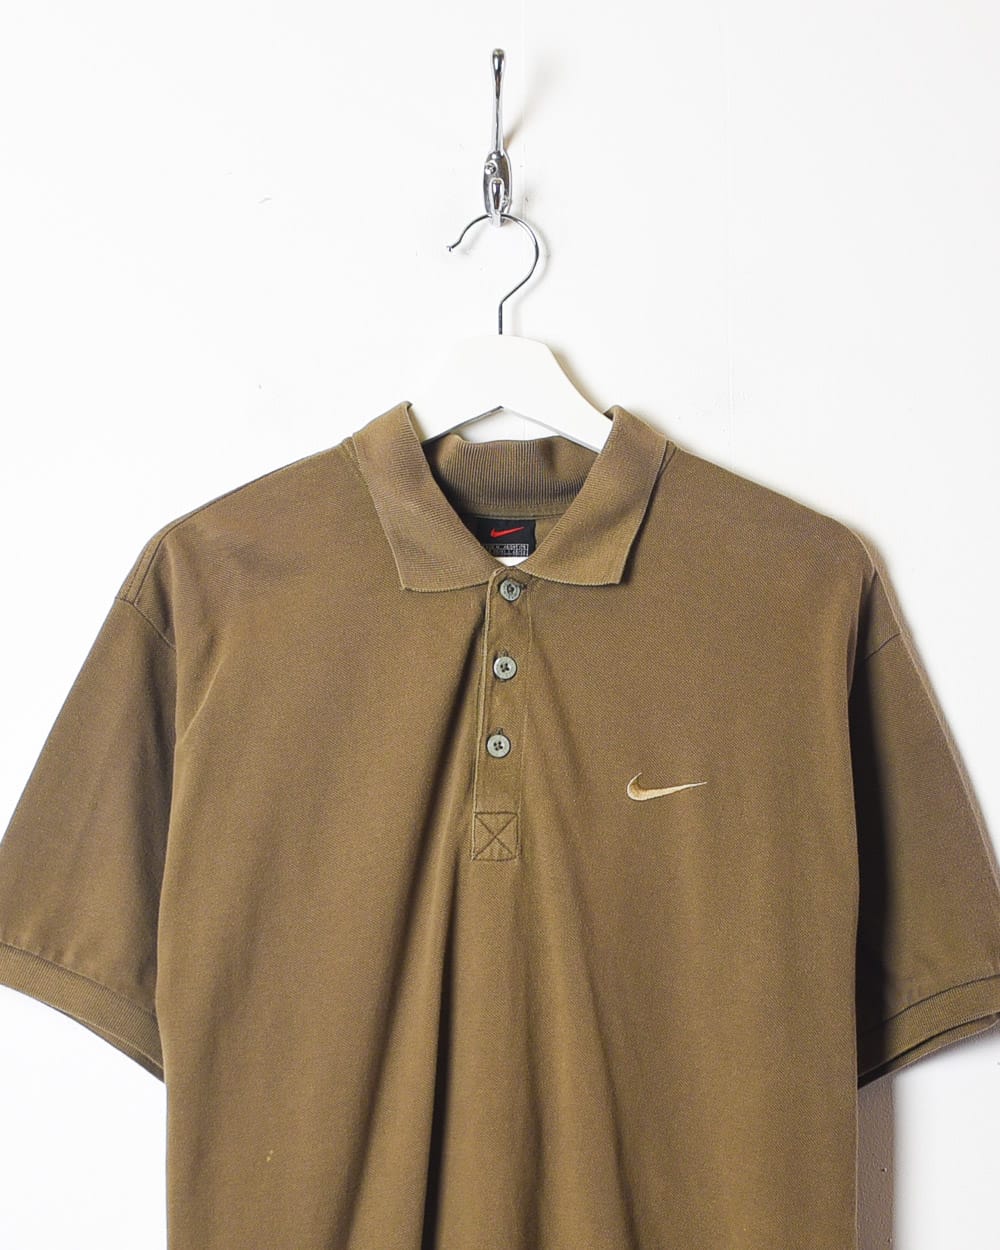 Brown Nike Polo Shirt - Medium